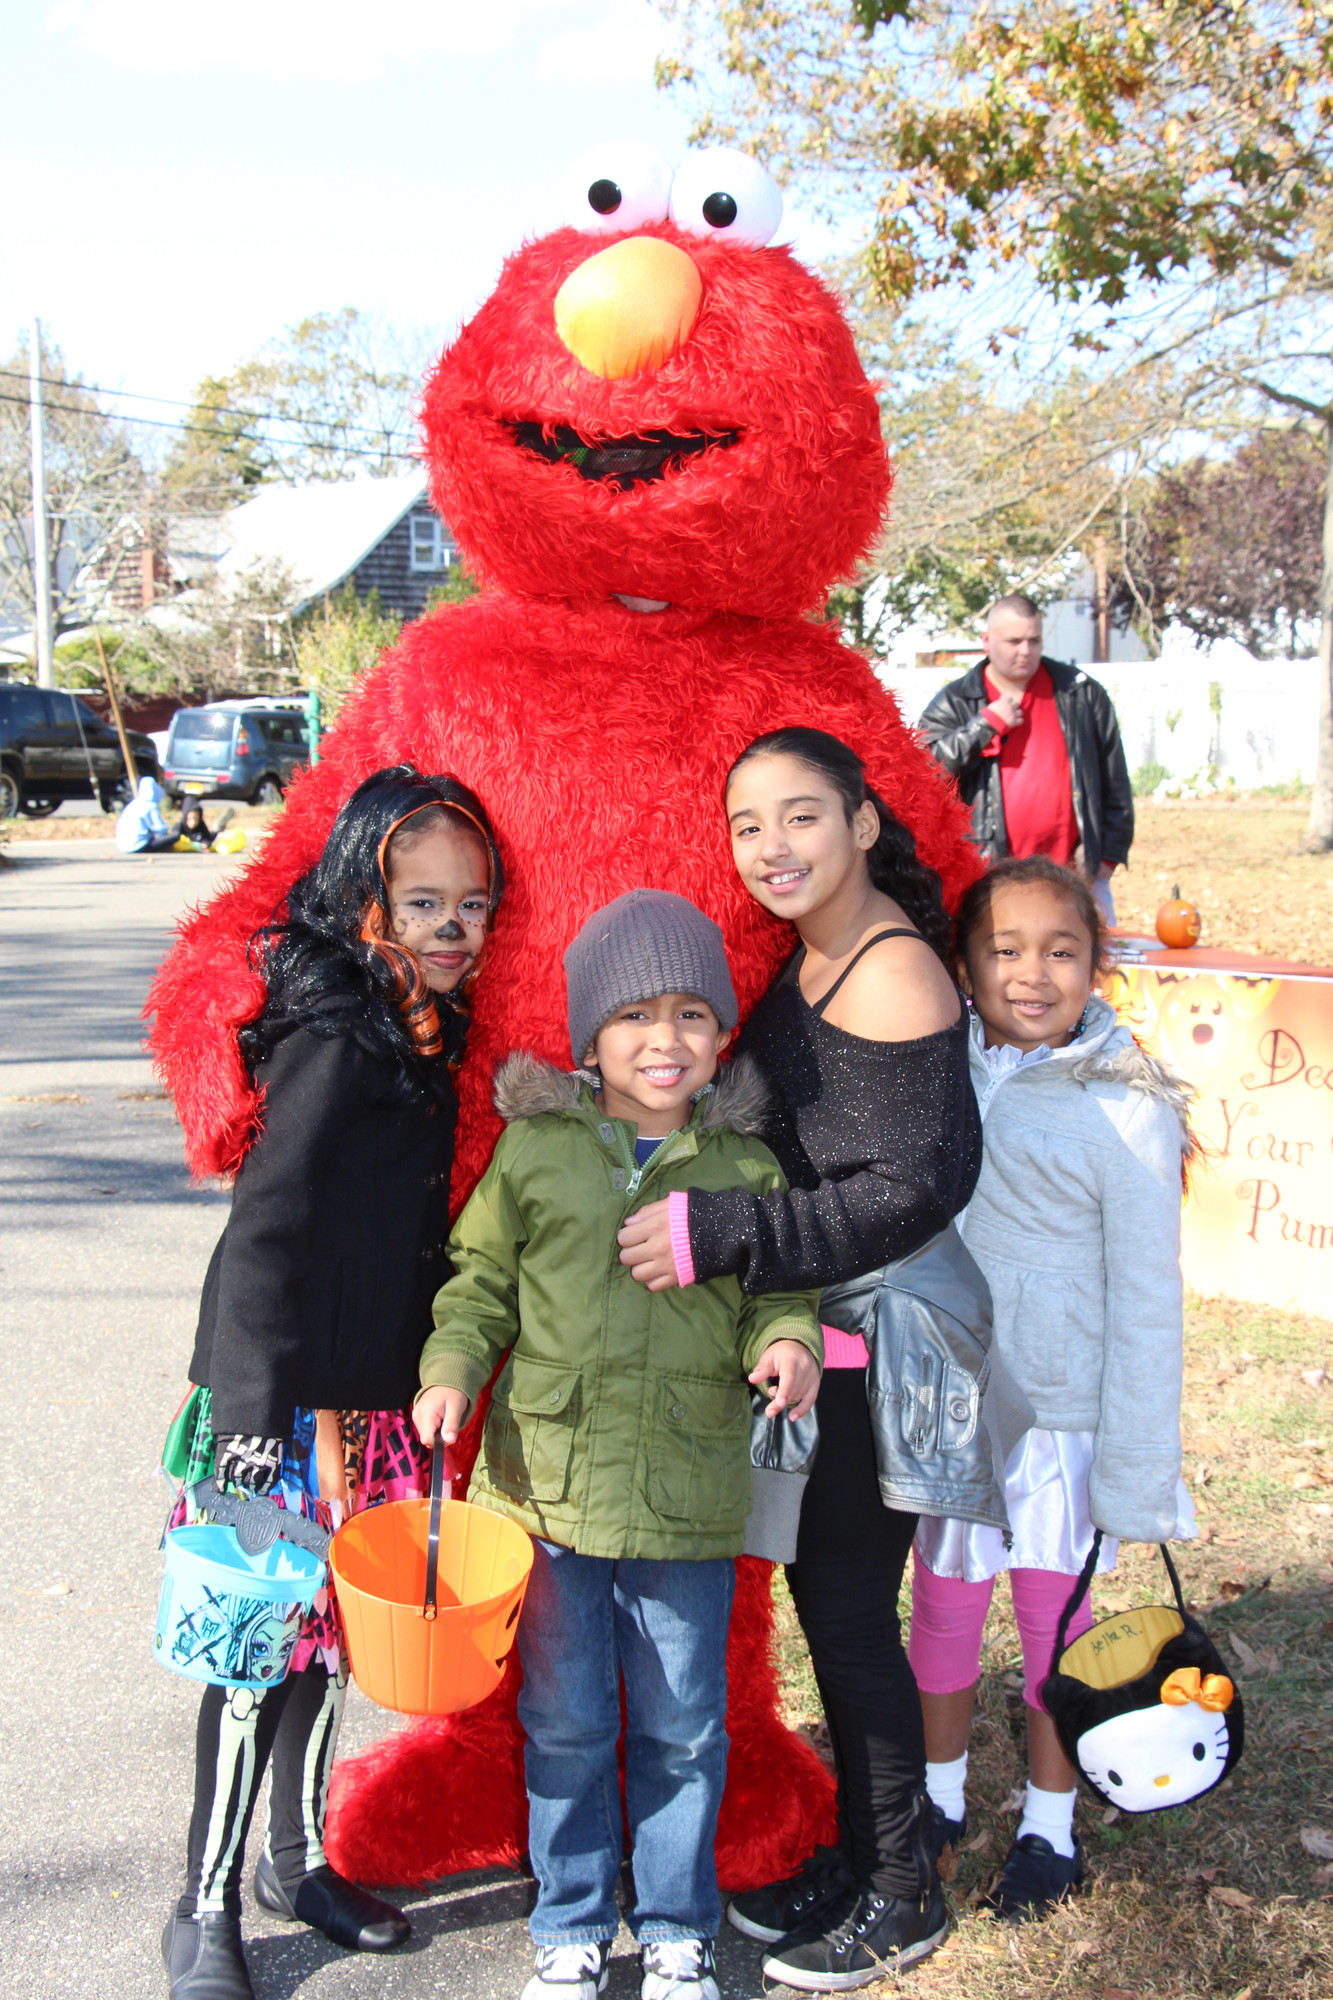 Elmo made a stop at the Baldwin Halloween fest where he met Mia, left, Sebastian, Jyliana and Isabella.